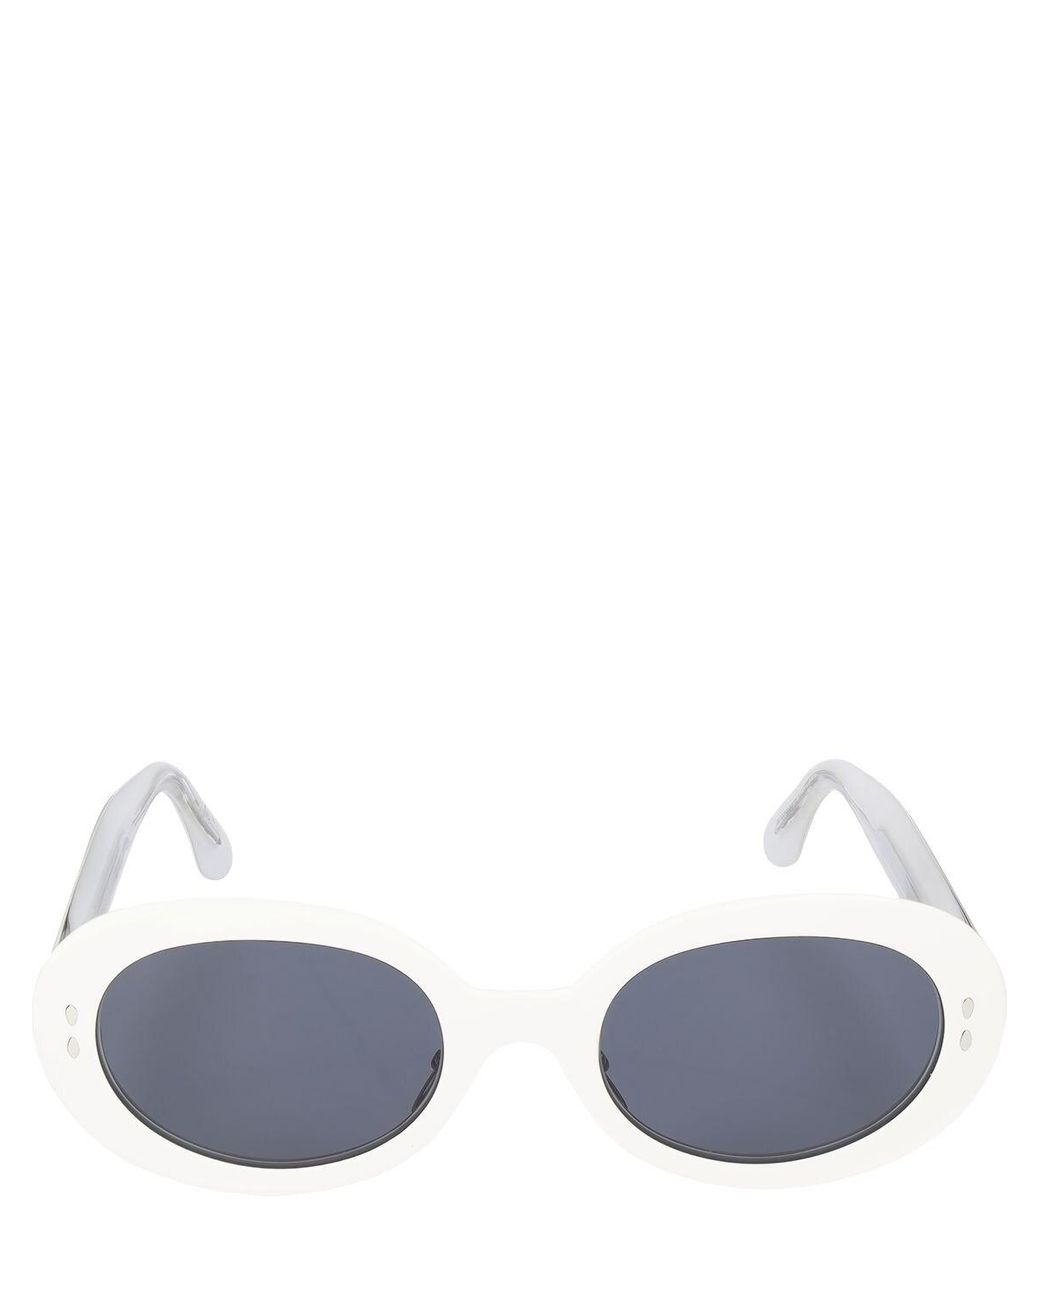 Grey Womens Sunglasses Isabel Marant Sunglasses Isabel Marant Oval Acetate Sunglasses in Black/Grey 